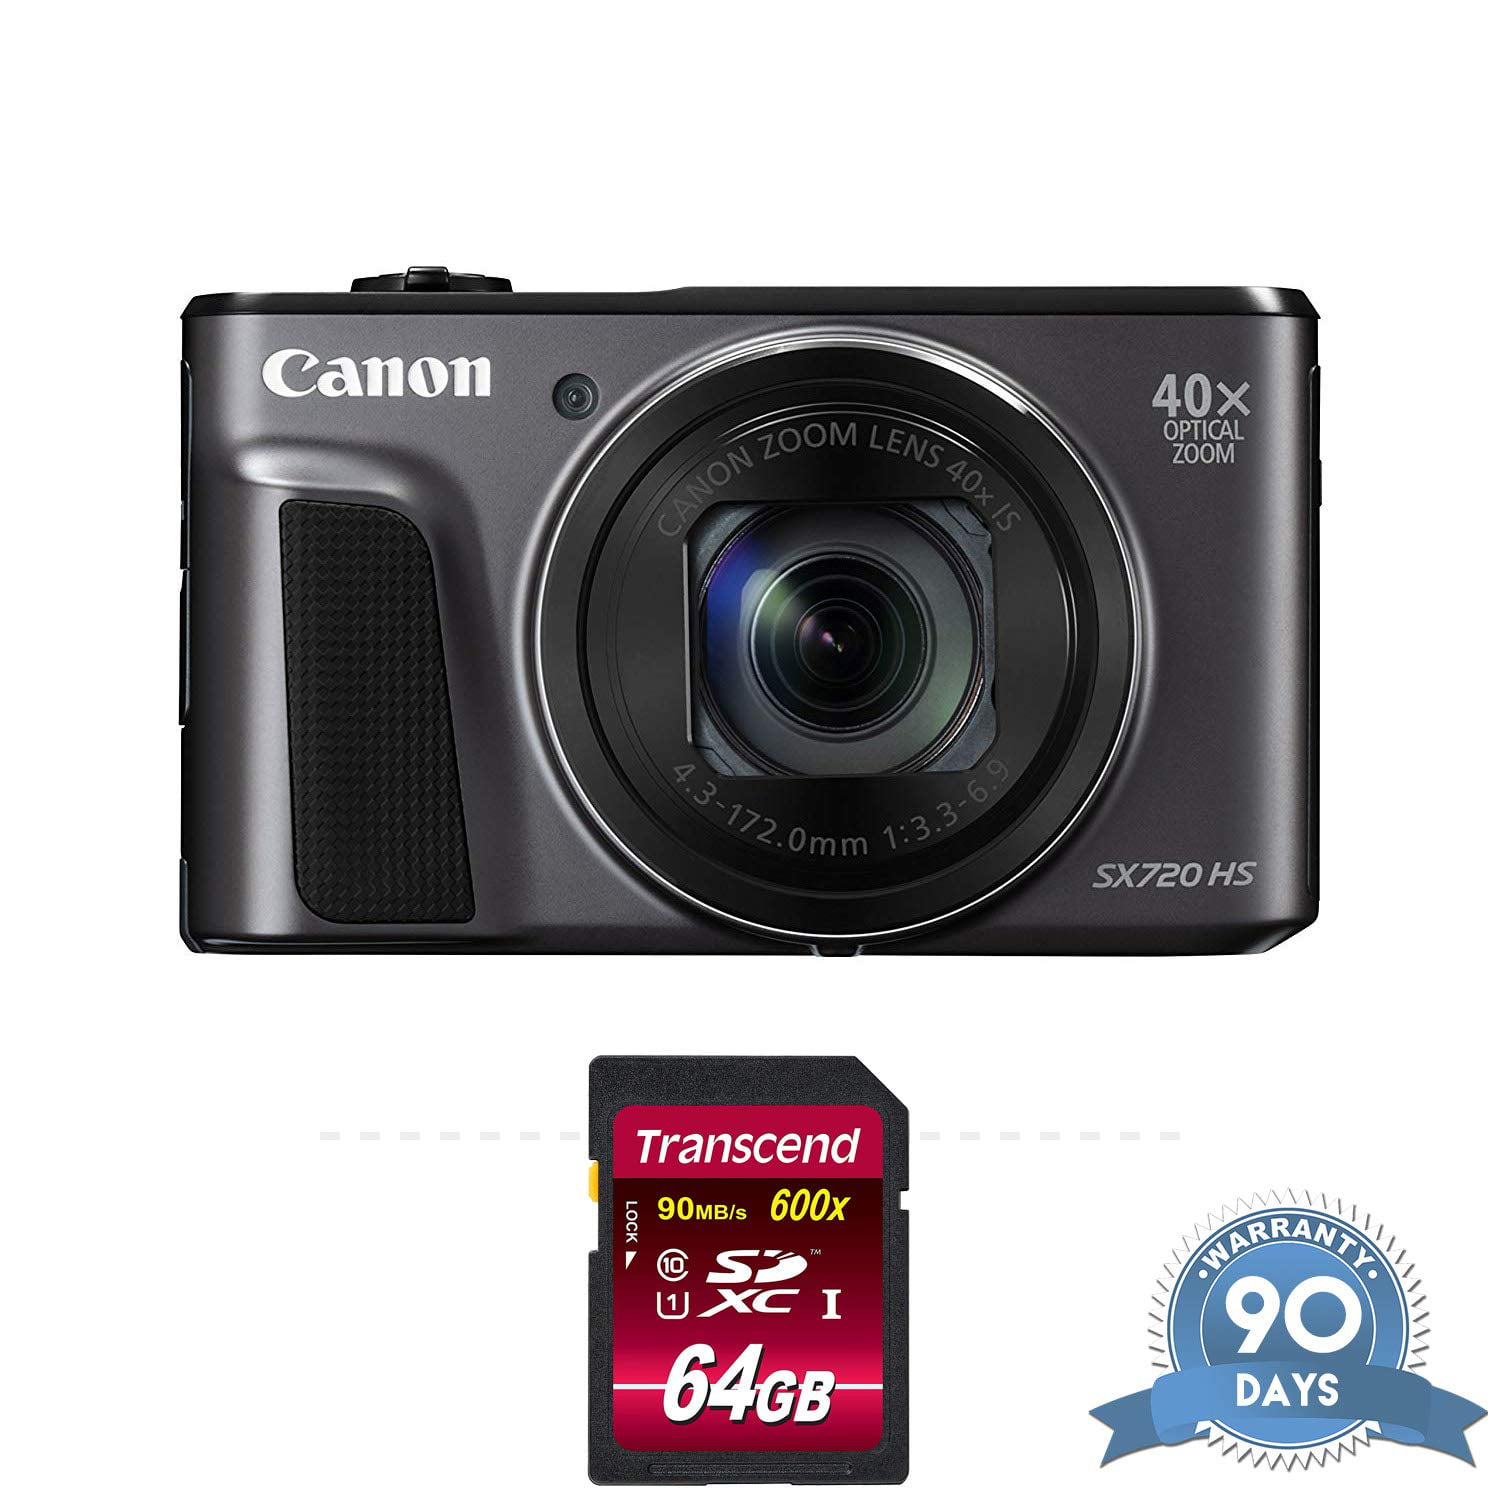 Restored Canon PowerShot SX720 HS Digital Camera (Black) with